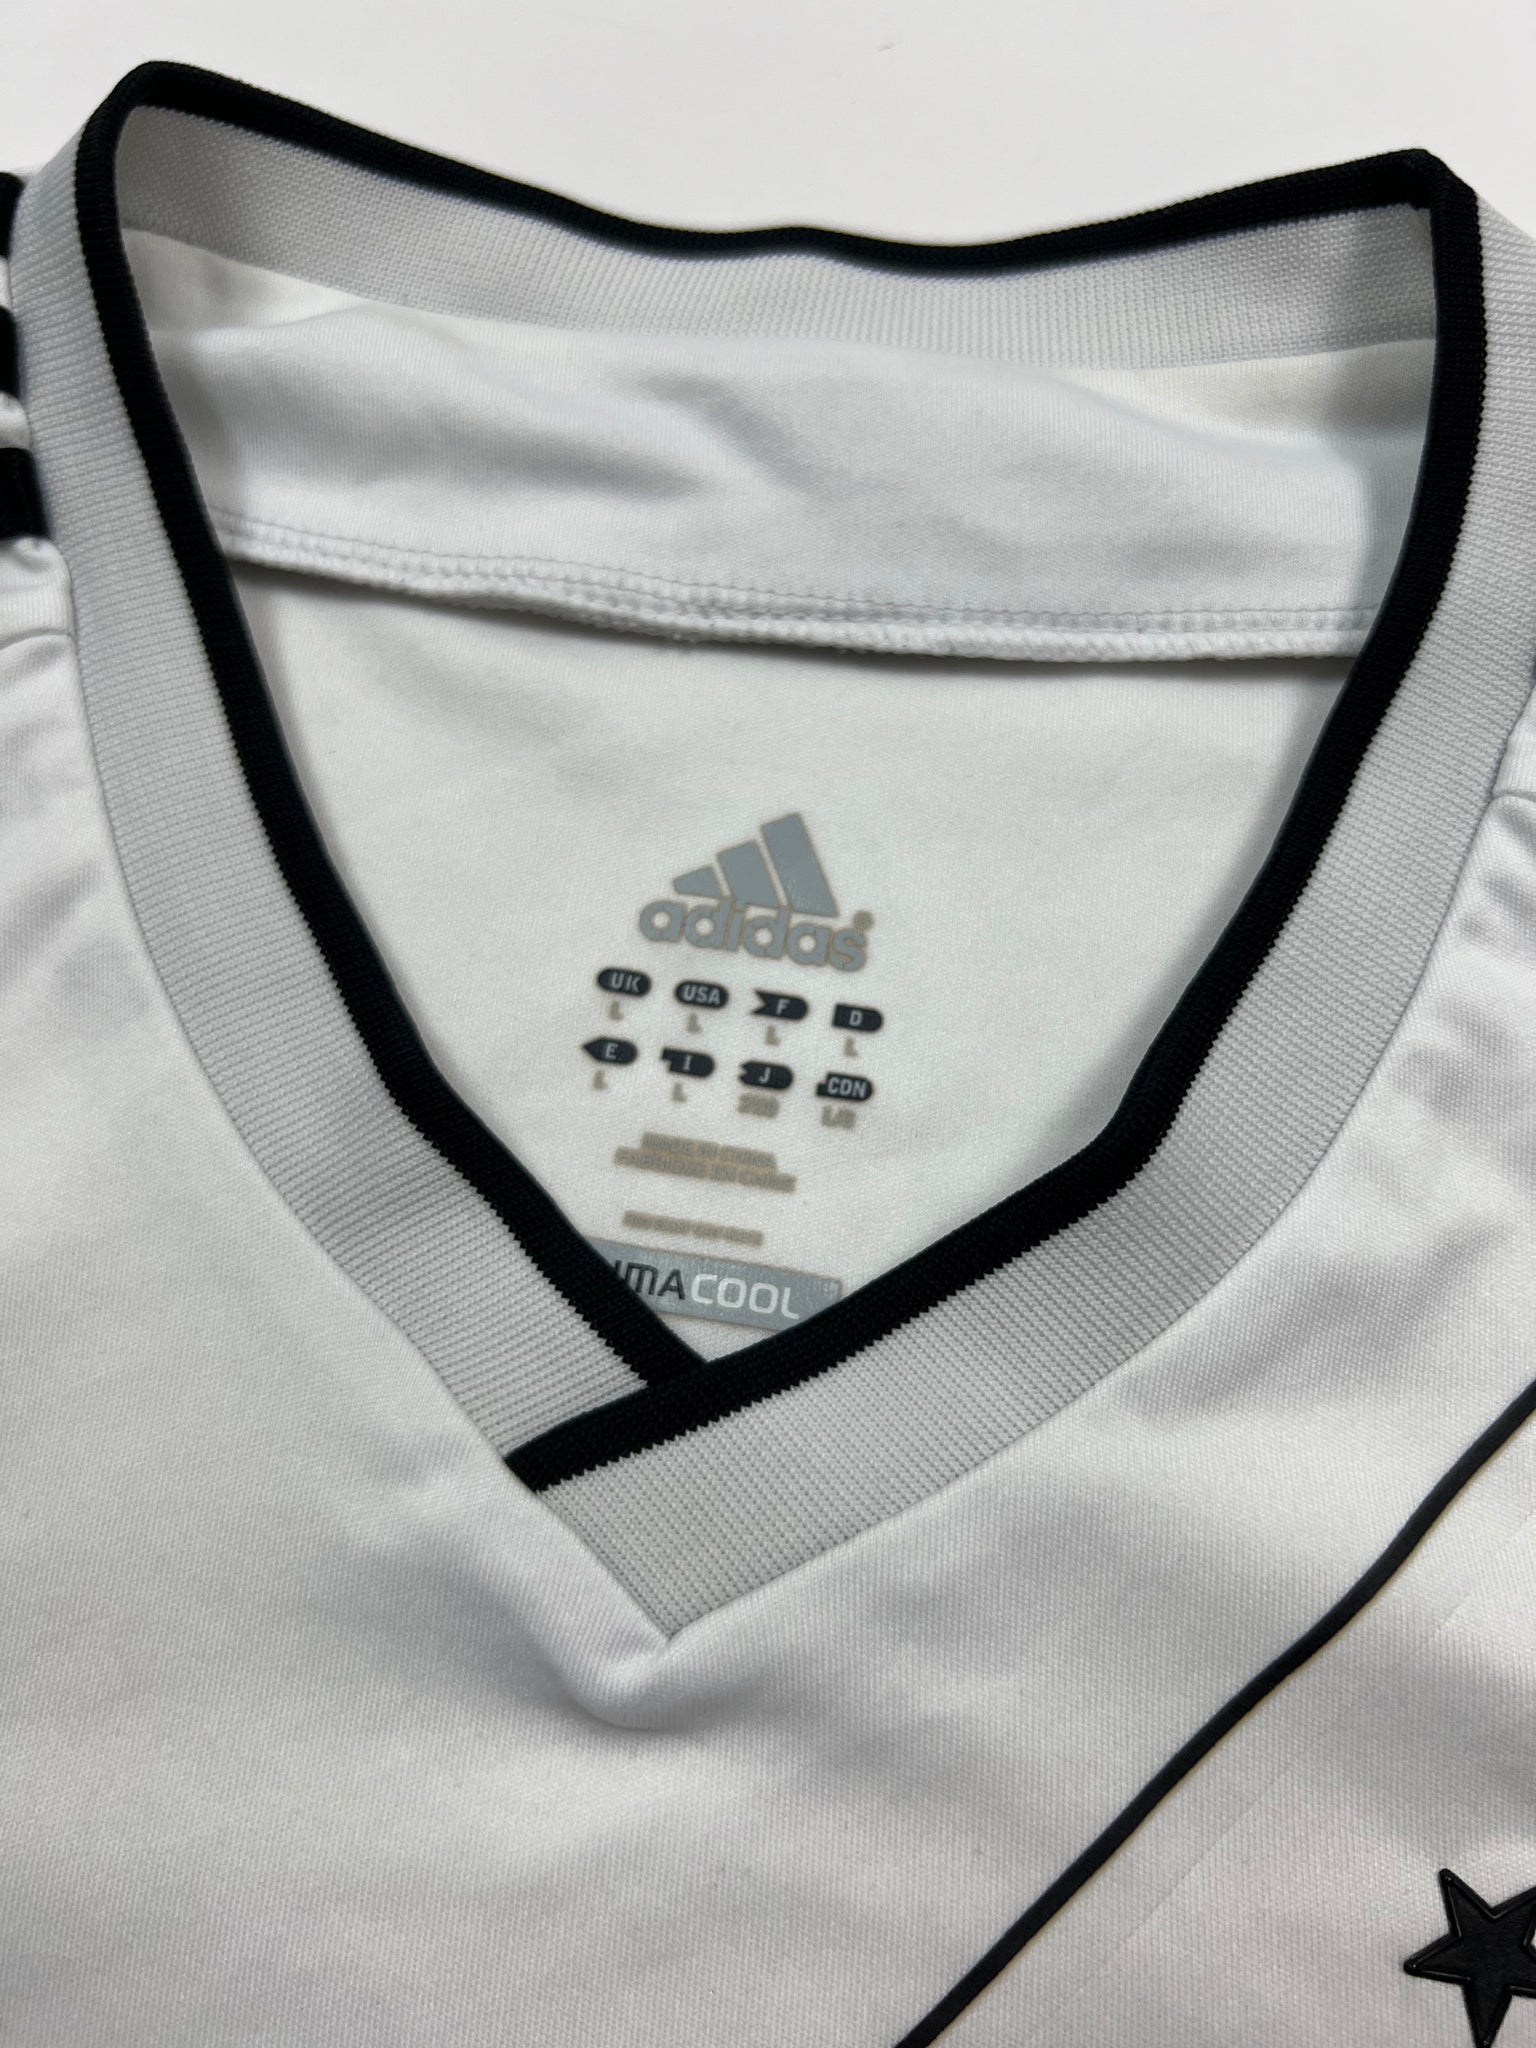 Adidas Germany Jersey (L)